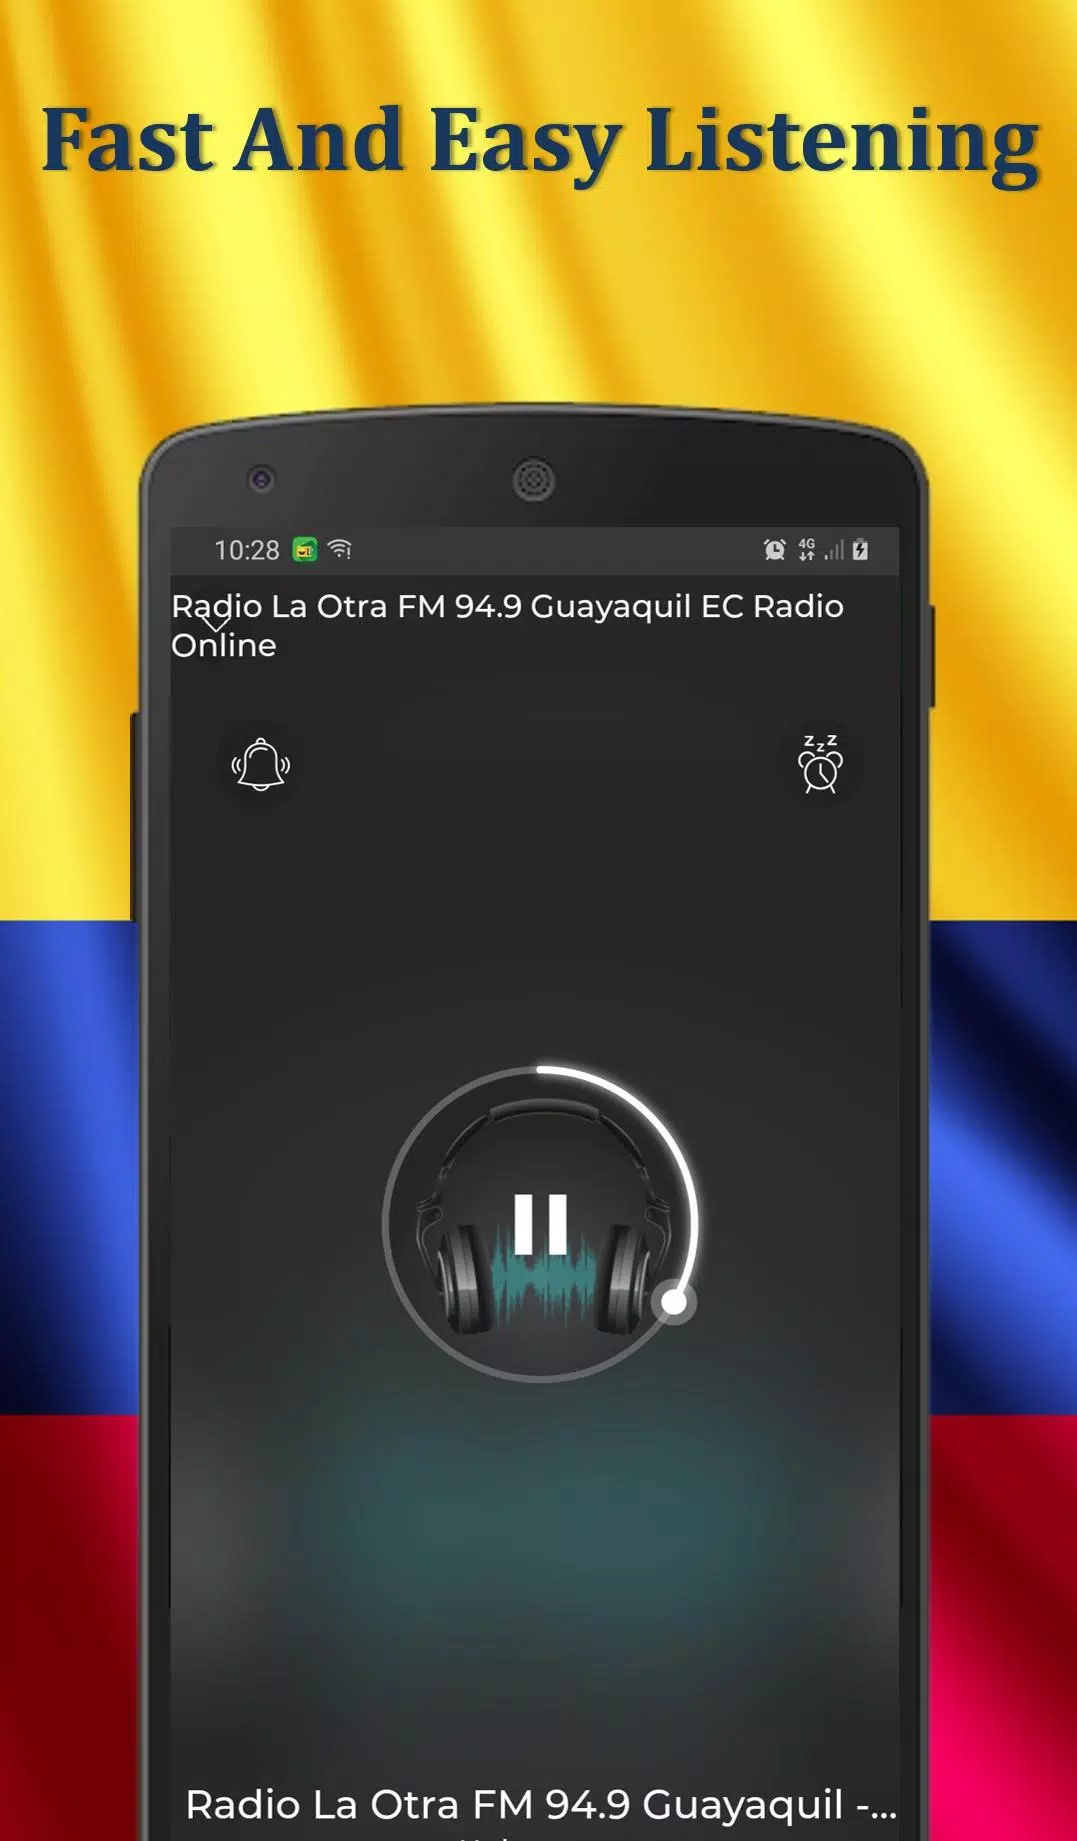 Radio La Otra FM 94.9 Guayaquil - EC Radio Online APK للاندرويد تنزيل